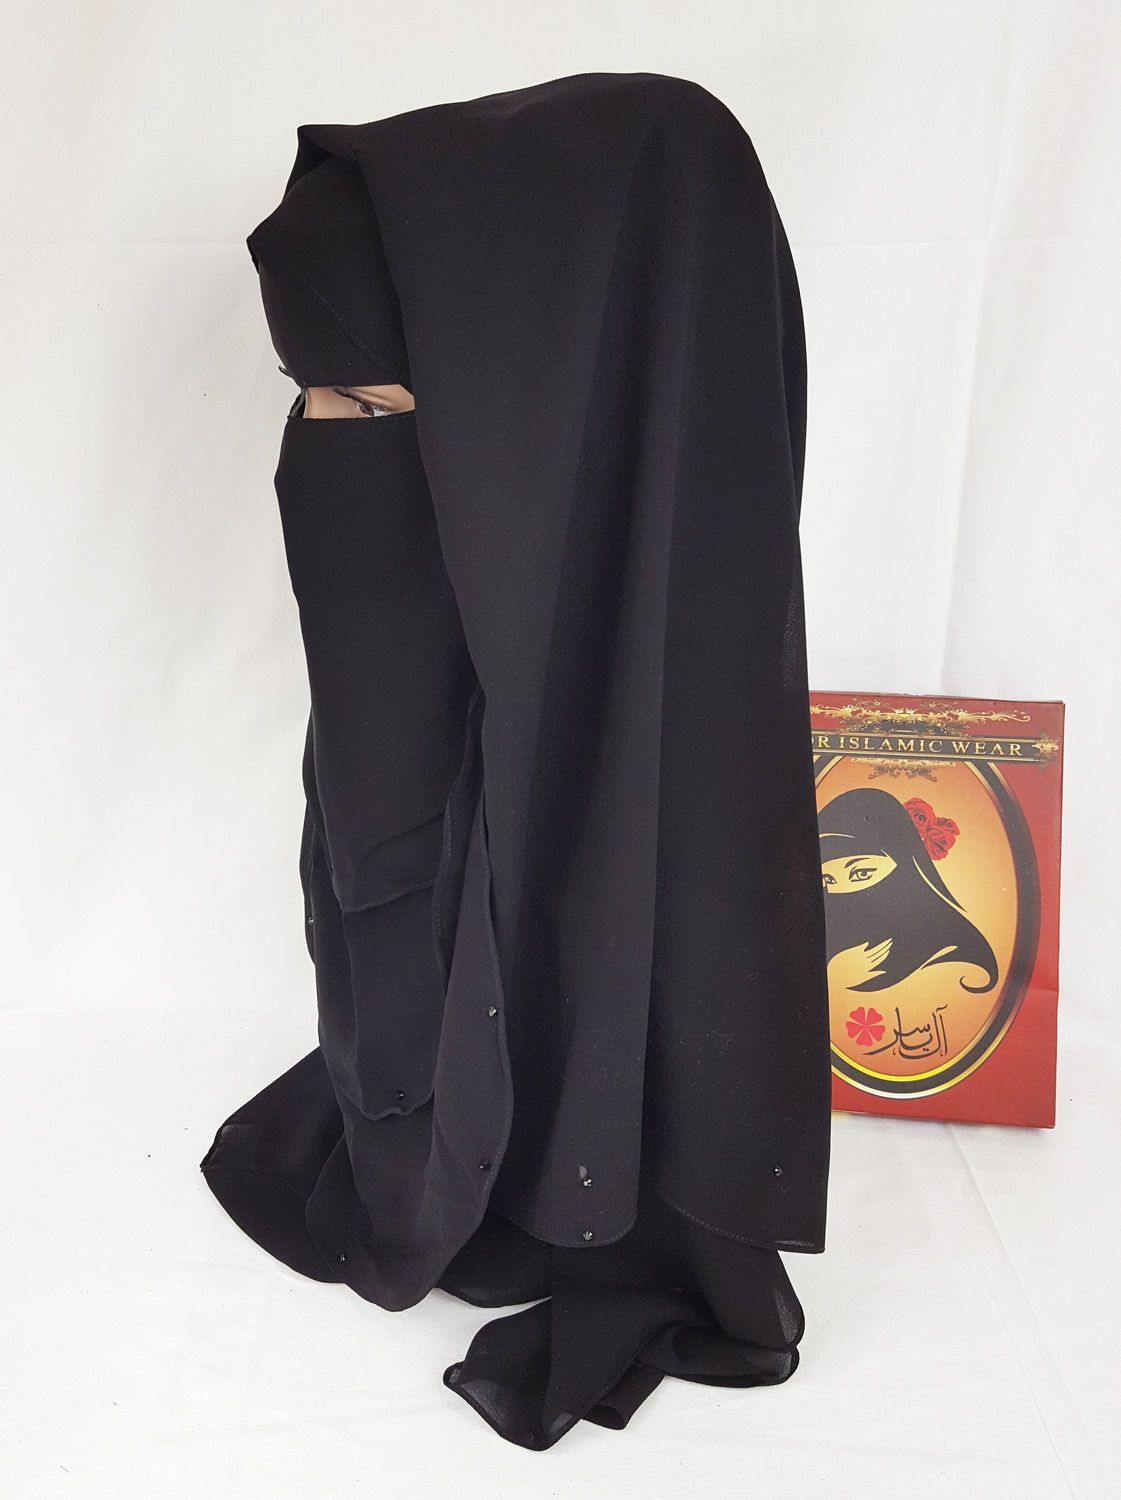 Premium Quality Women 2-PCS Black Niqab Scarf Set Hijab Jilbab Abaya IslamWear - Arabian Shopping Zone